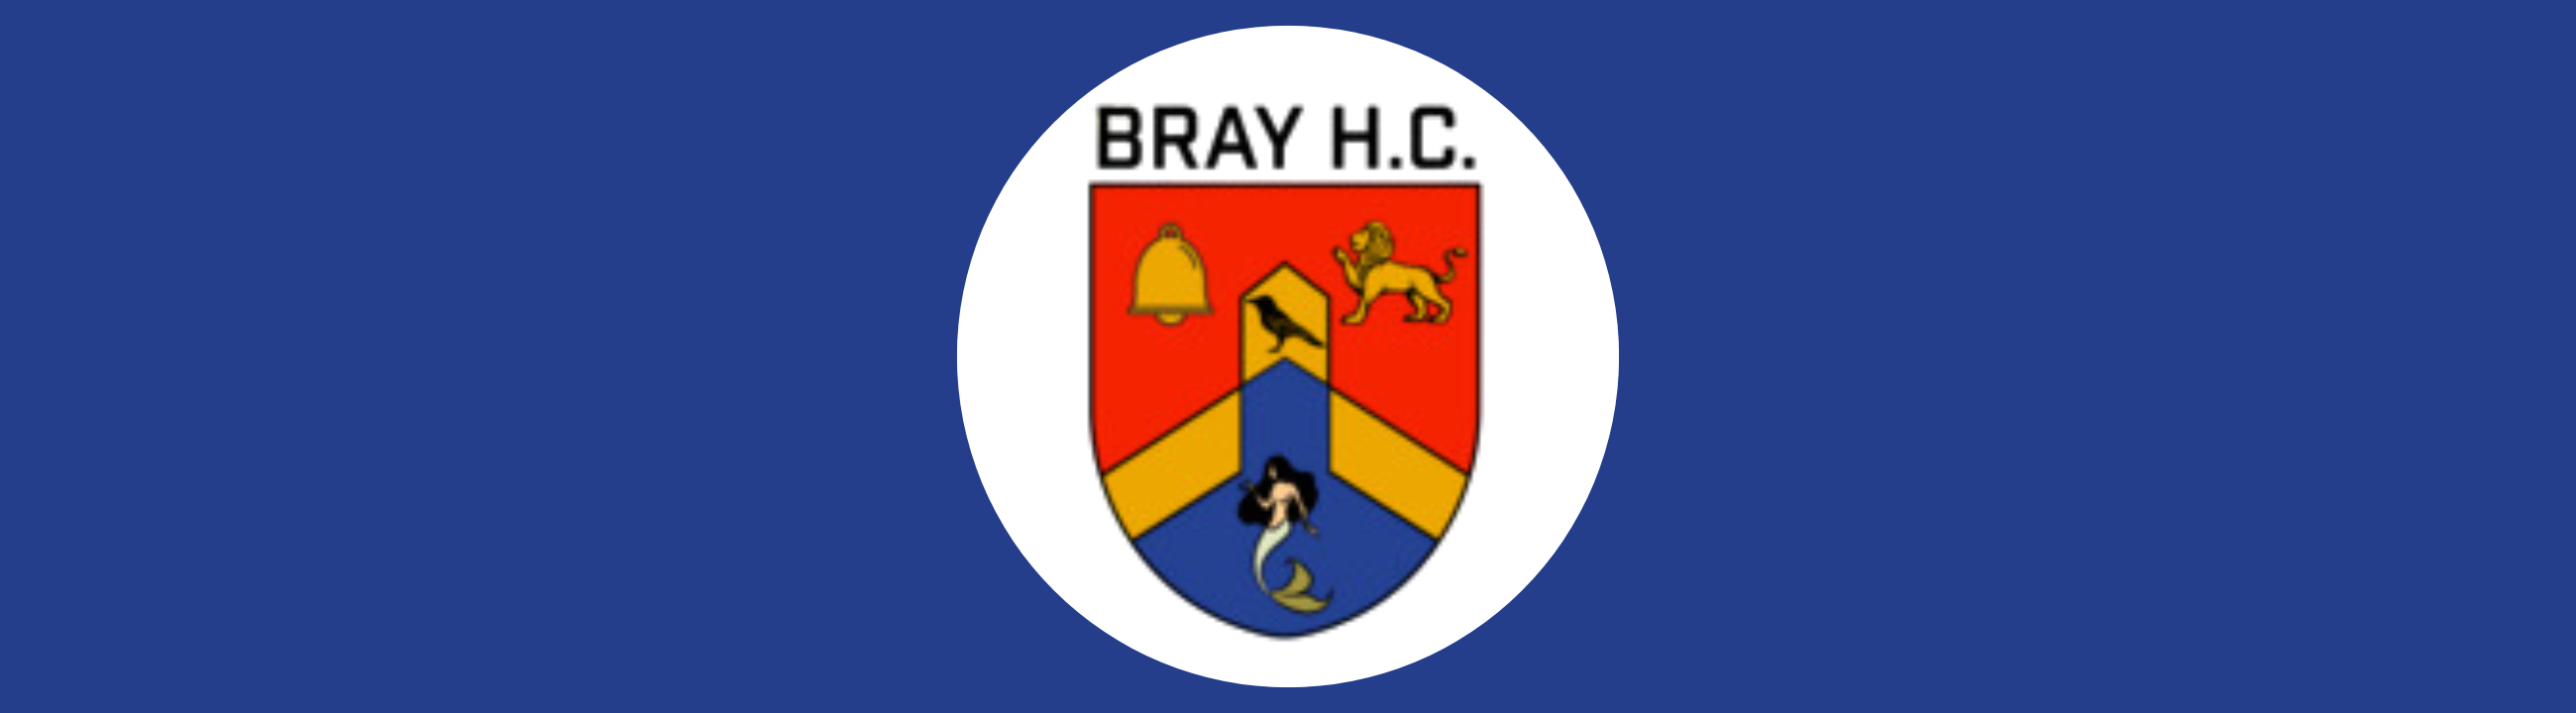 Bray Hockey Club